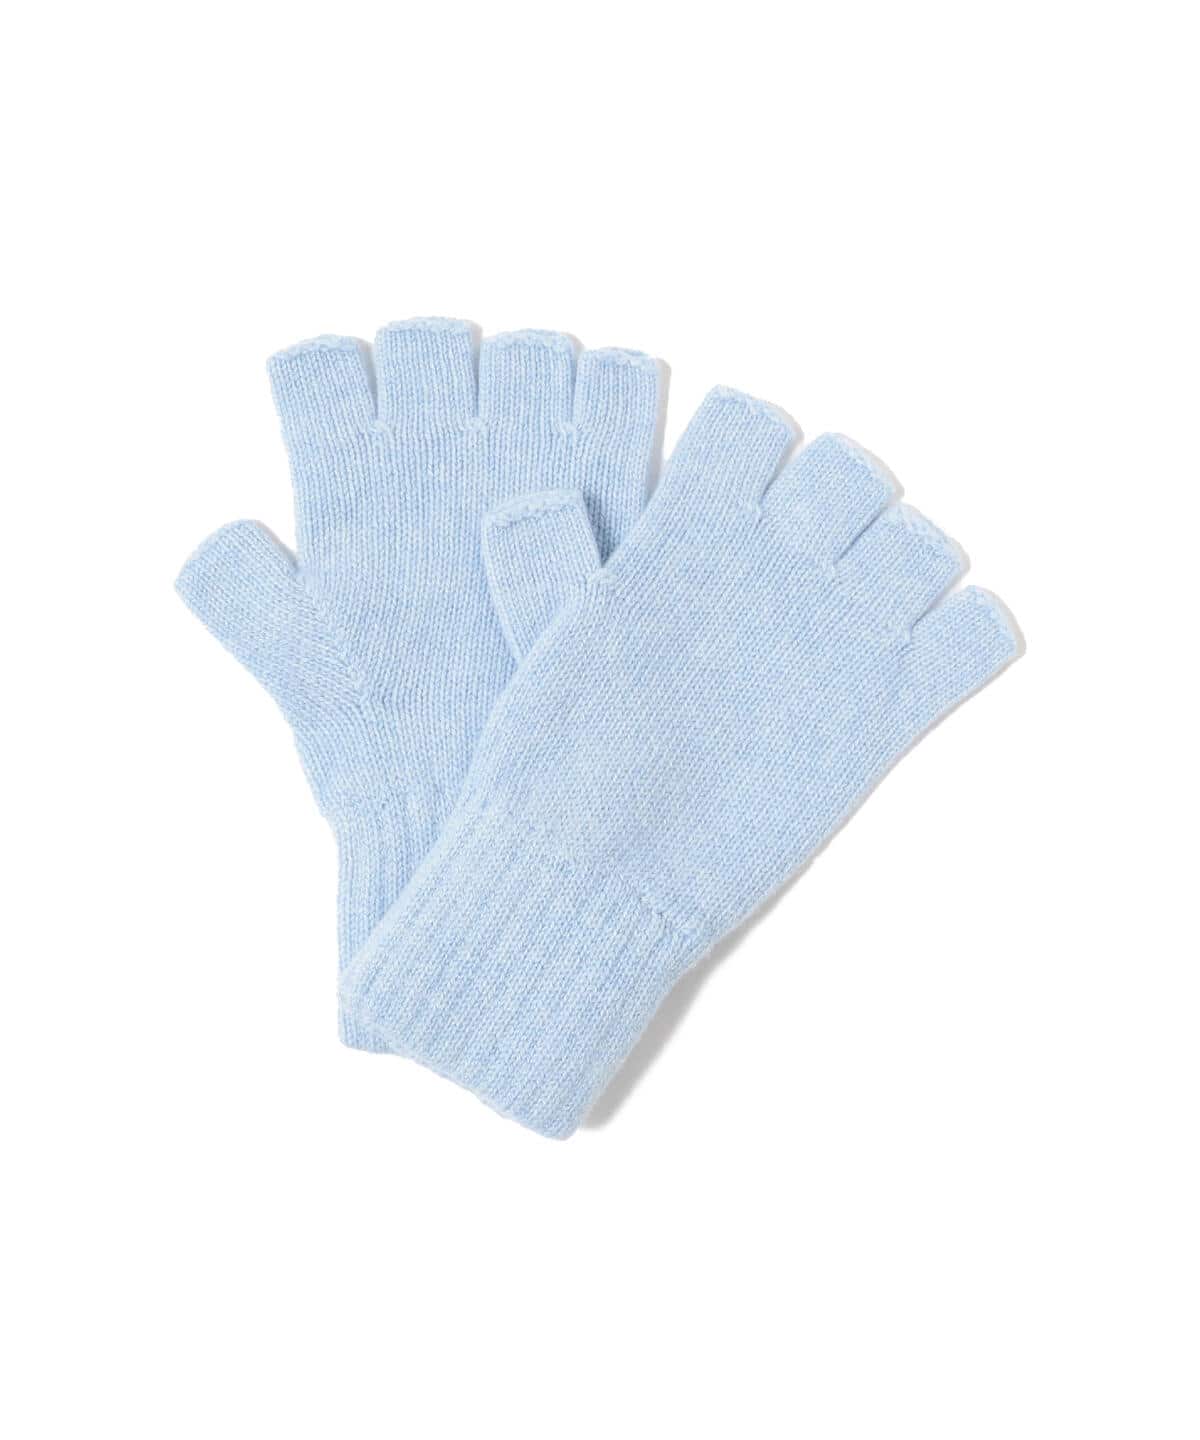 B:MING by BEAMS B:MING by BEAMS MILITARY wool fingerless gloves